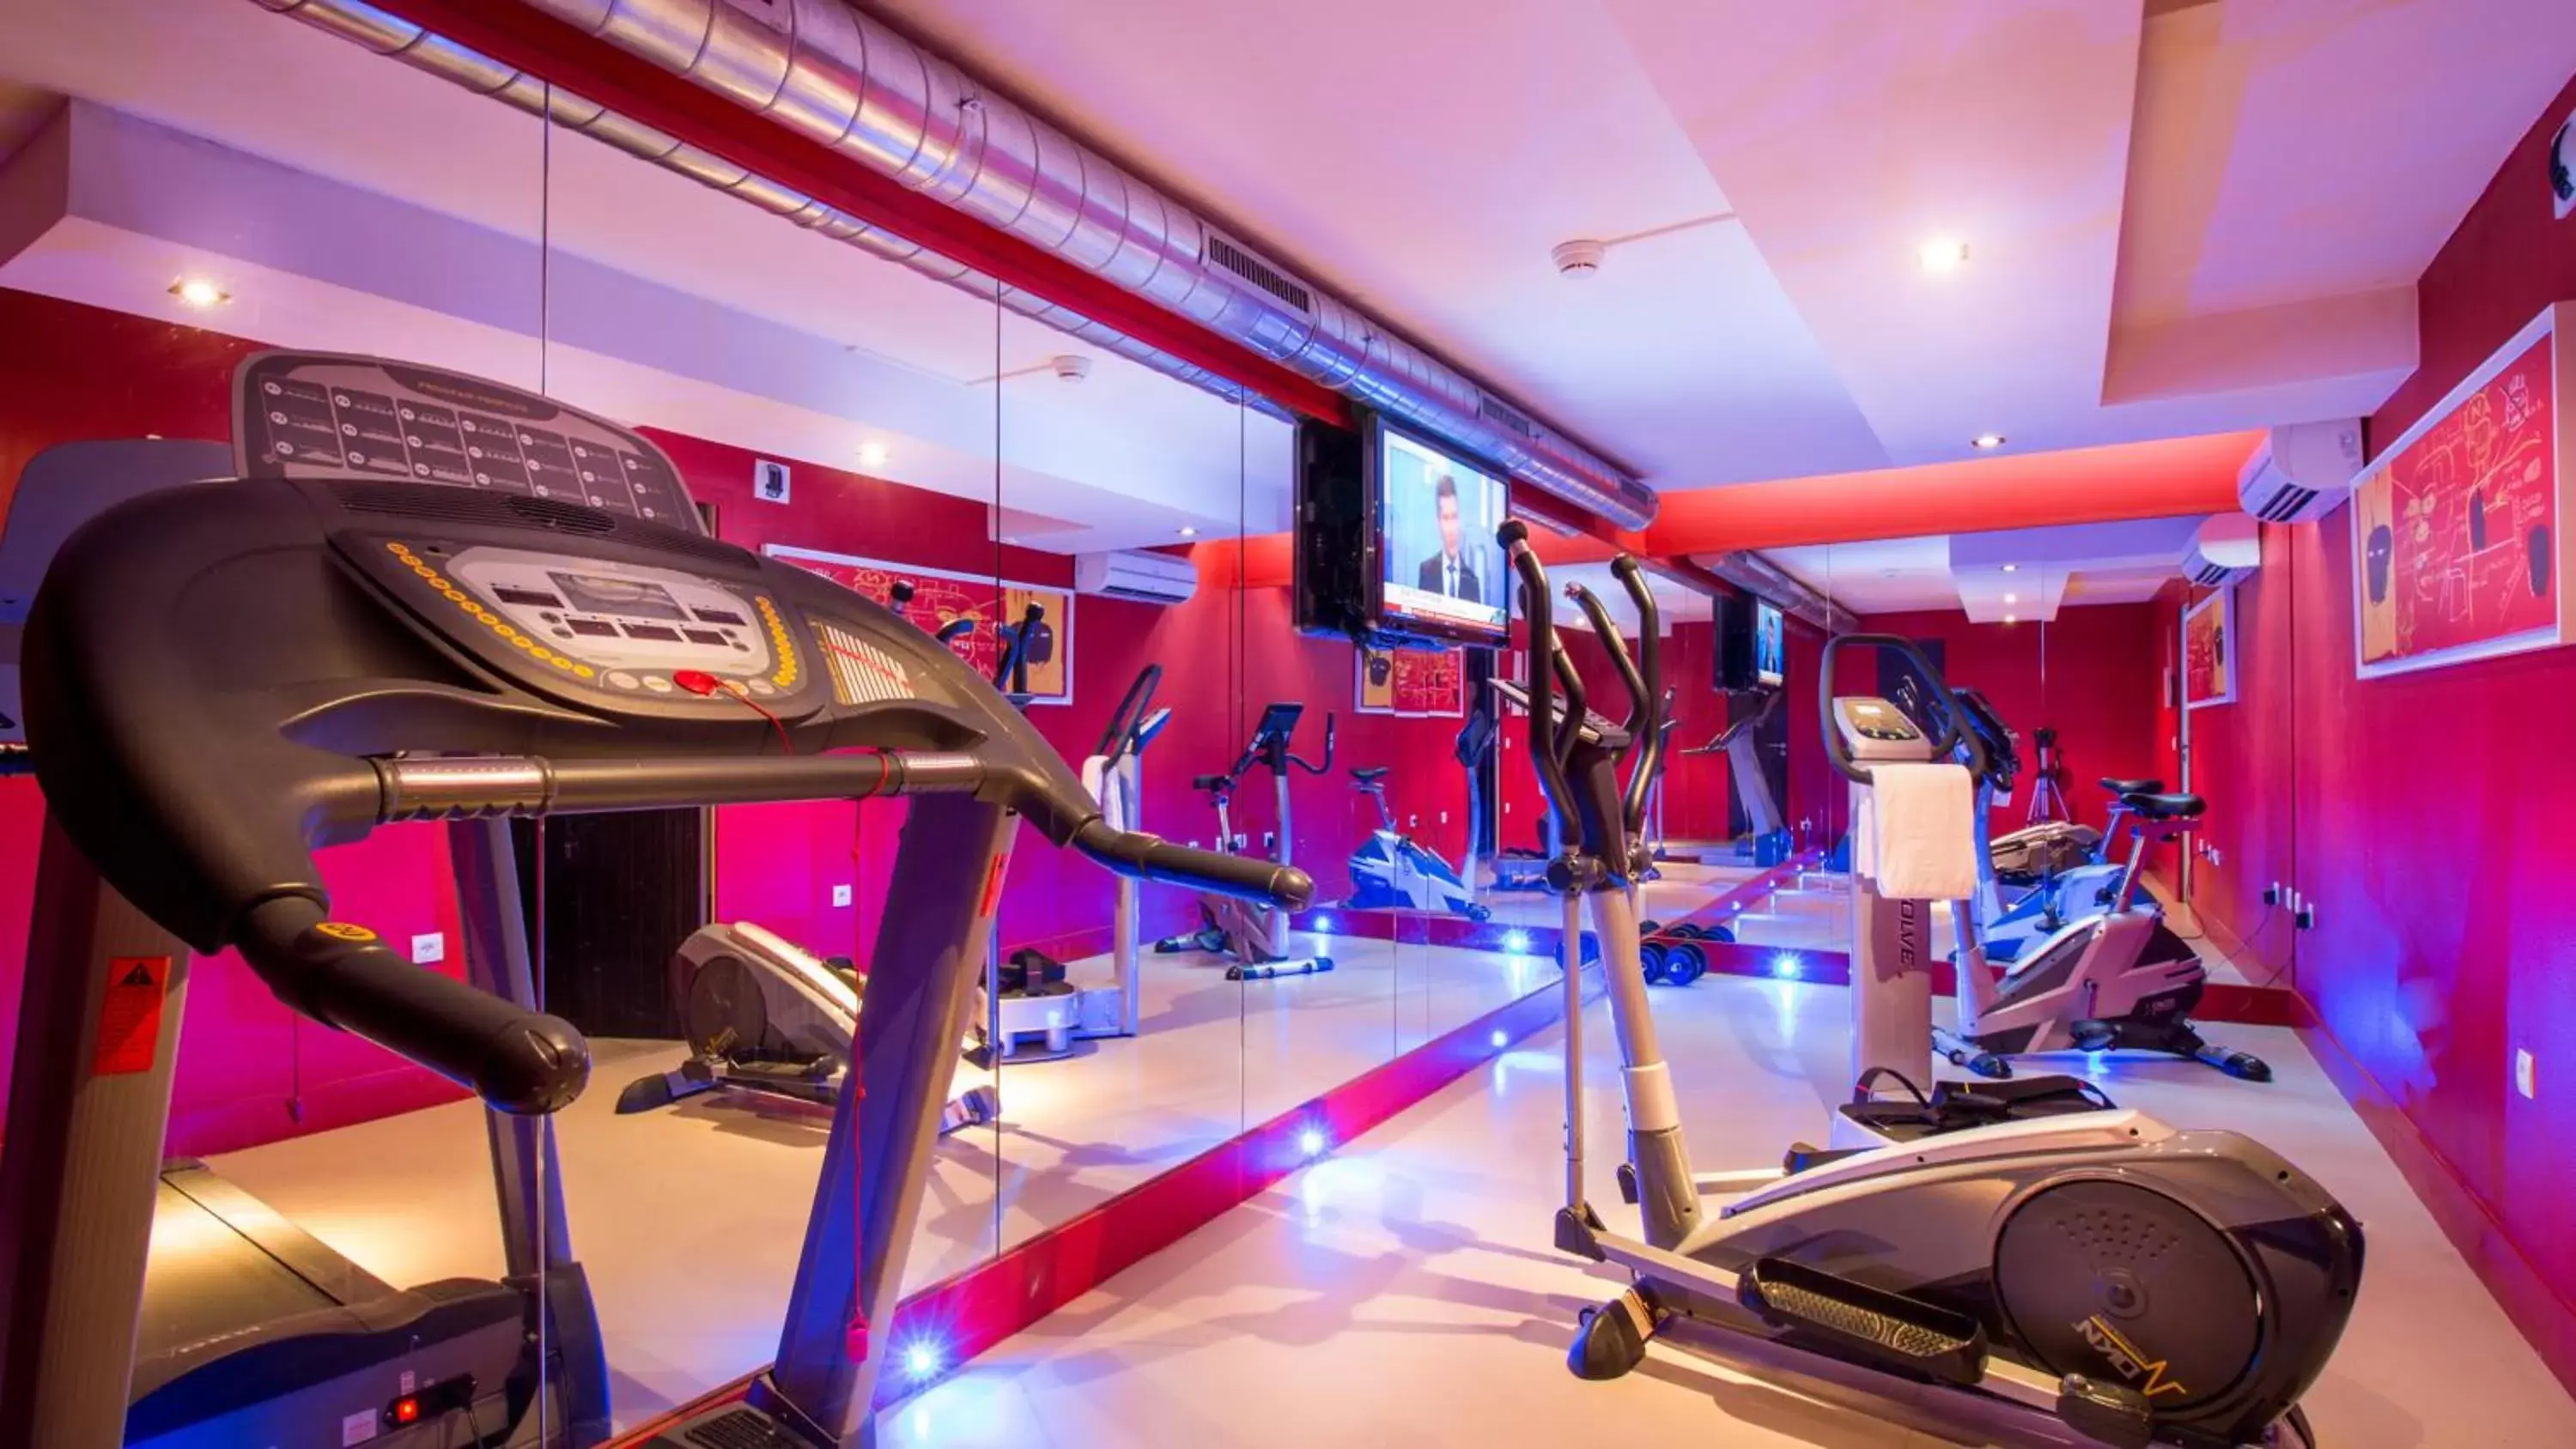 Fitness centre/facilities, Fitness Center/Facilities in Adagio Grenoble Centre